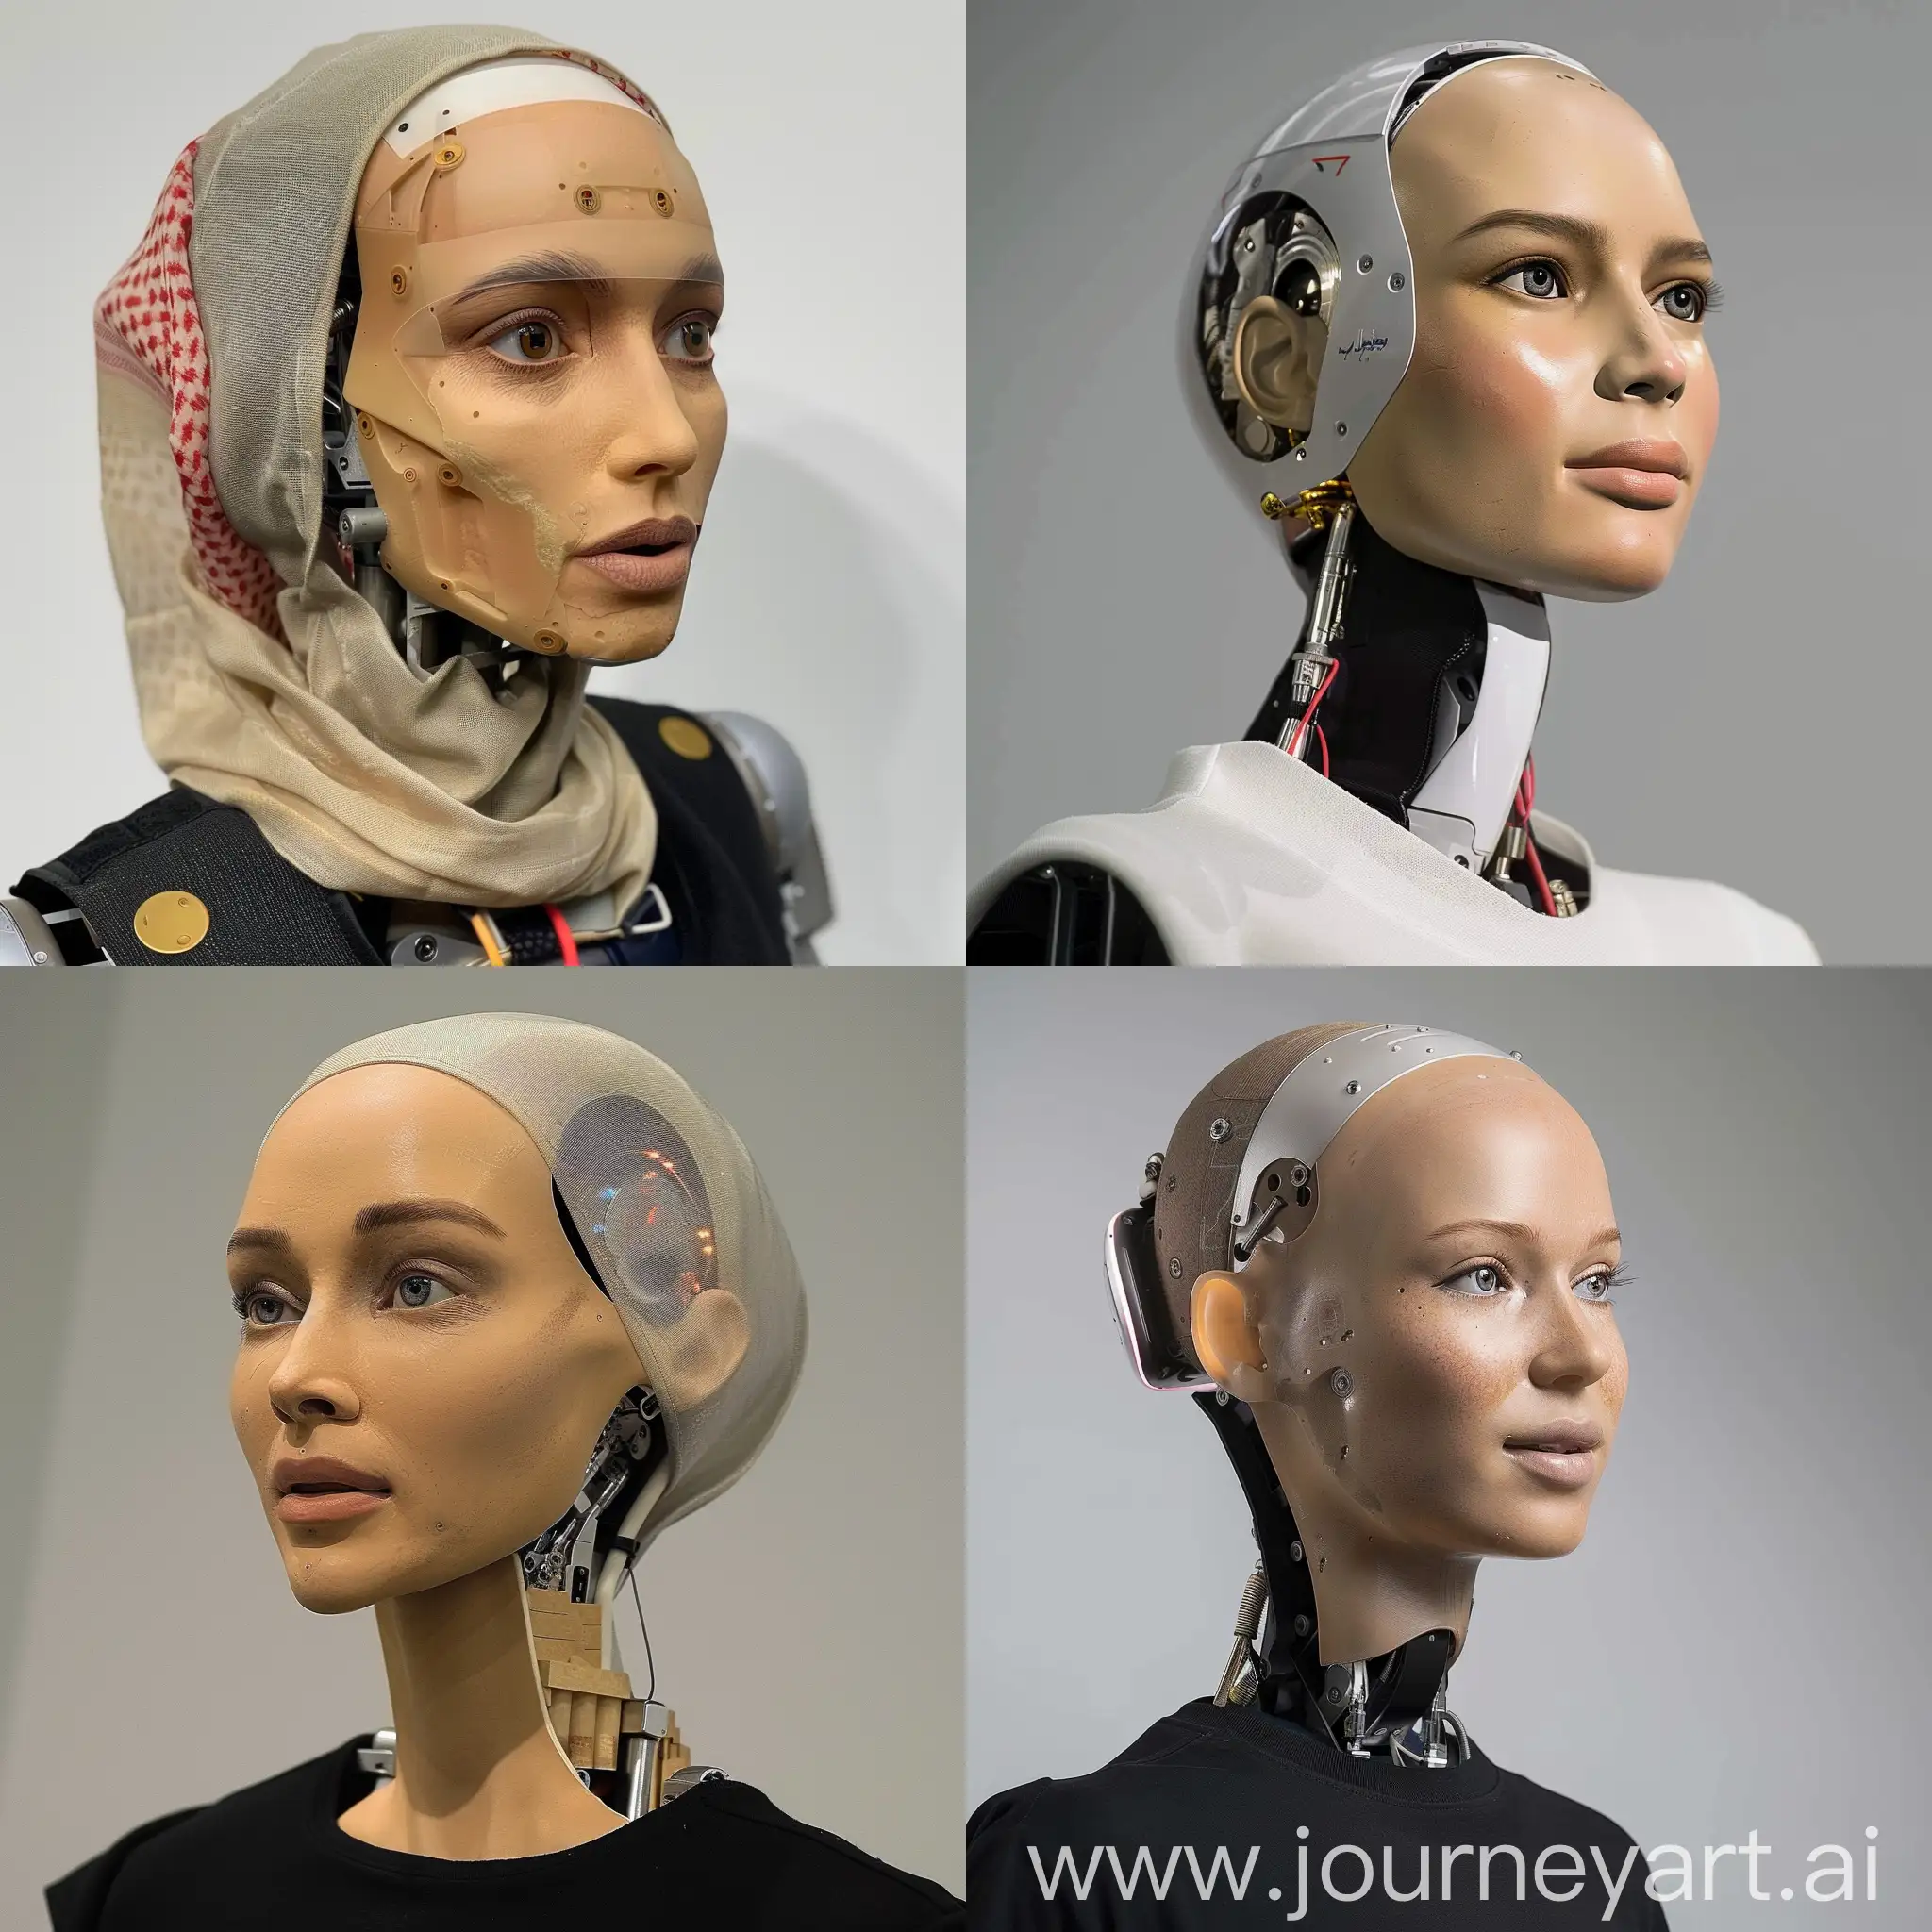 human robot made by saudi arabia for spying purpose looking like a real human